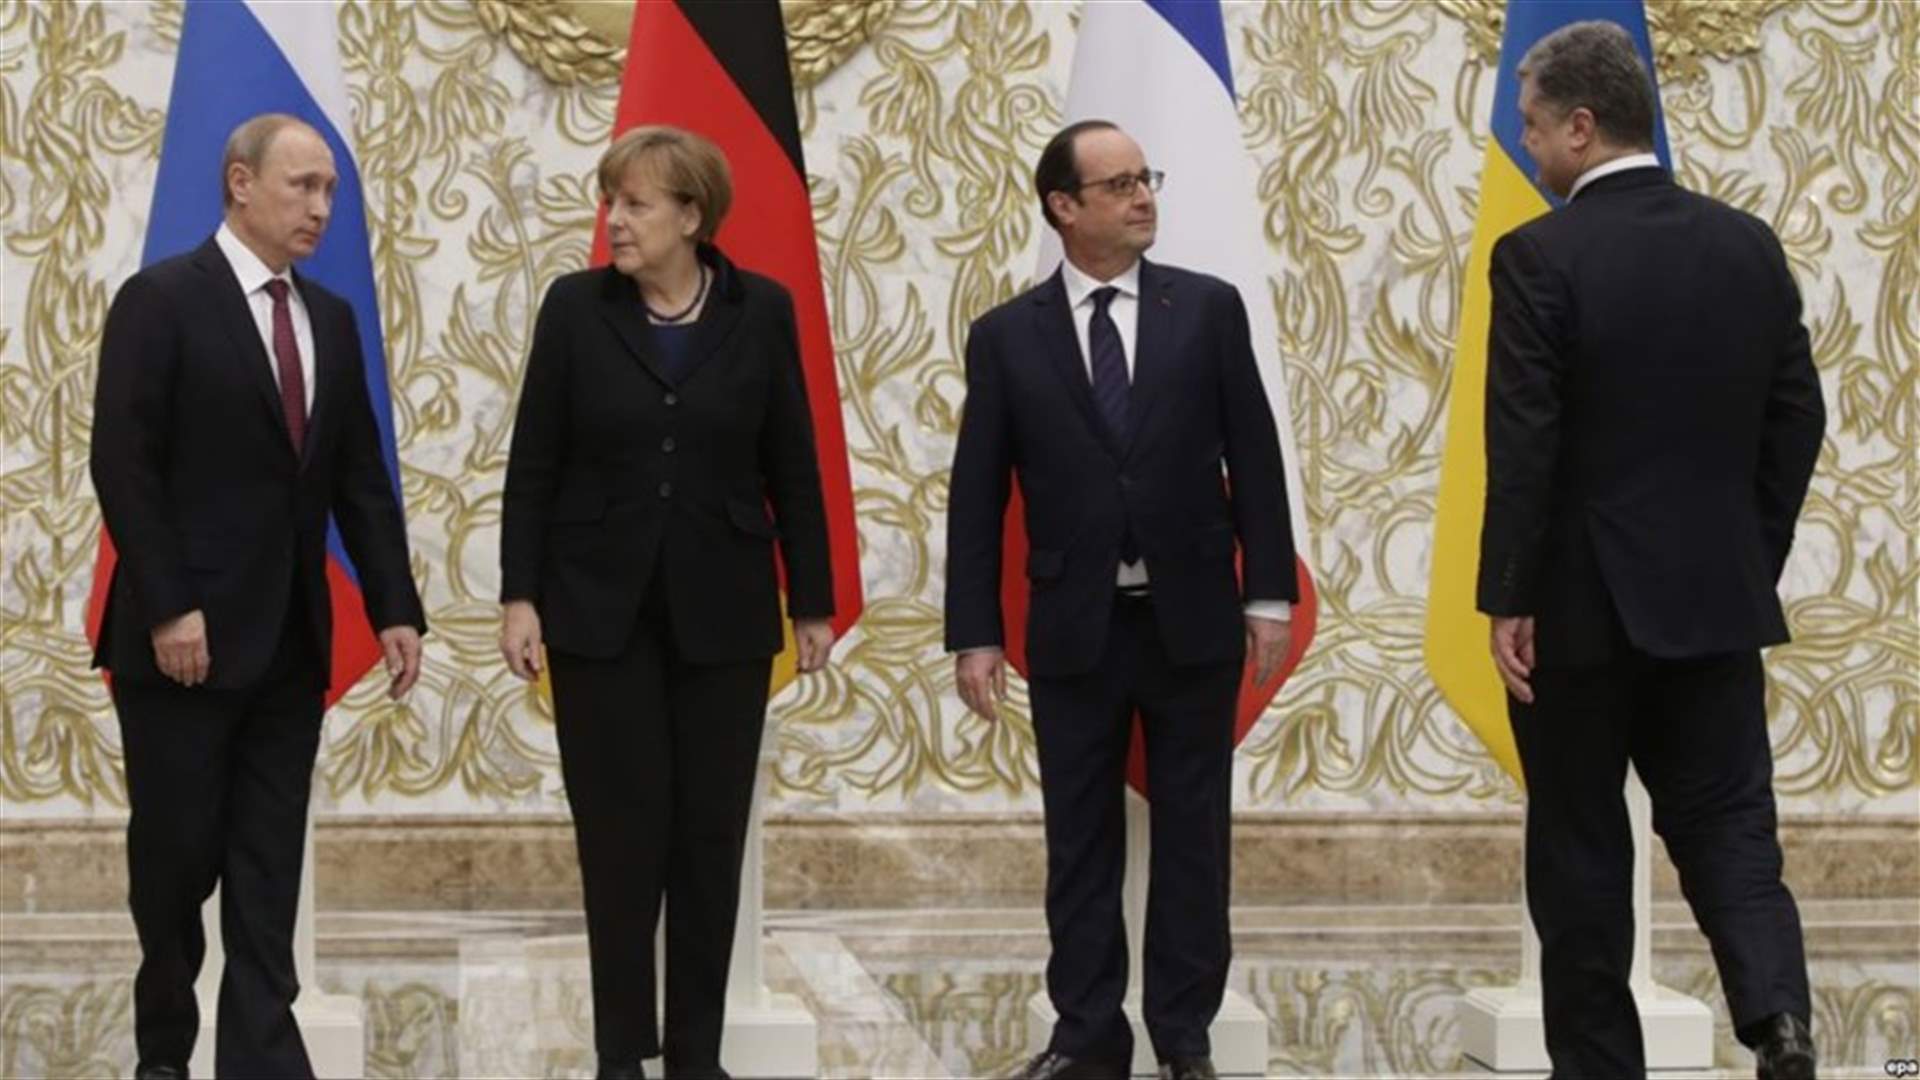 Hollande to push ceasefire extension at Syria talks with Putin, Merkel   